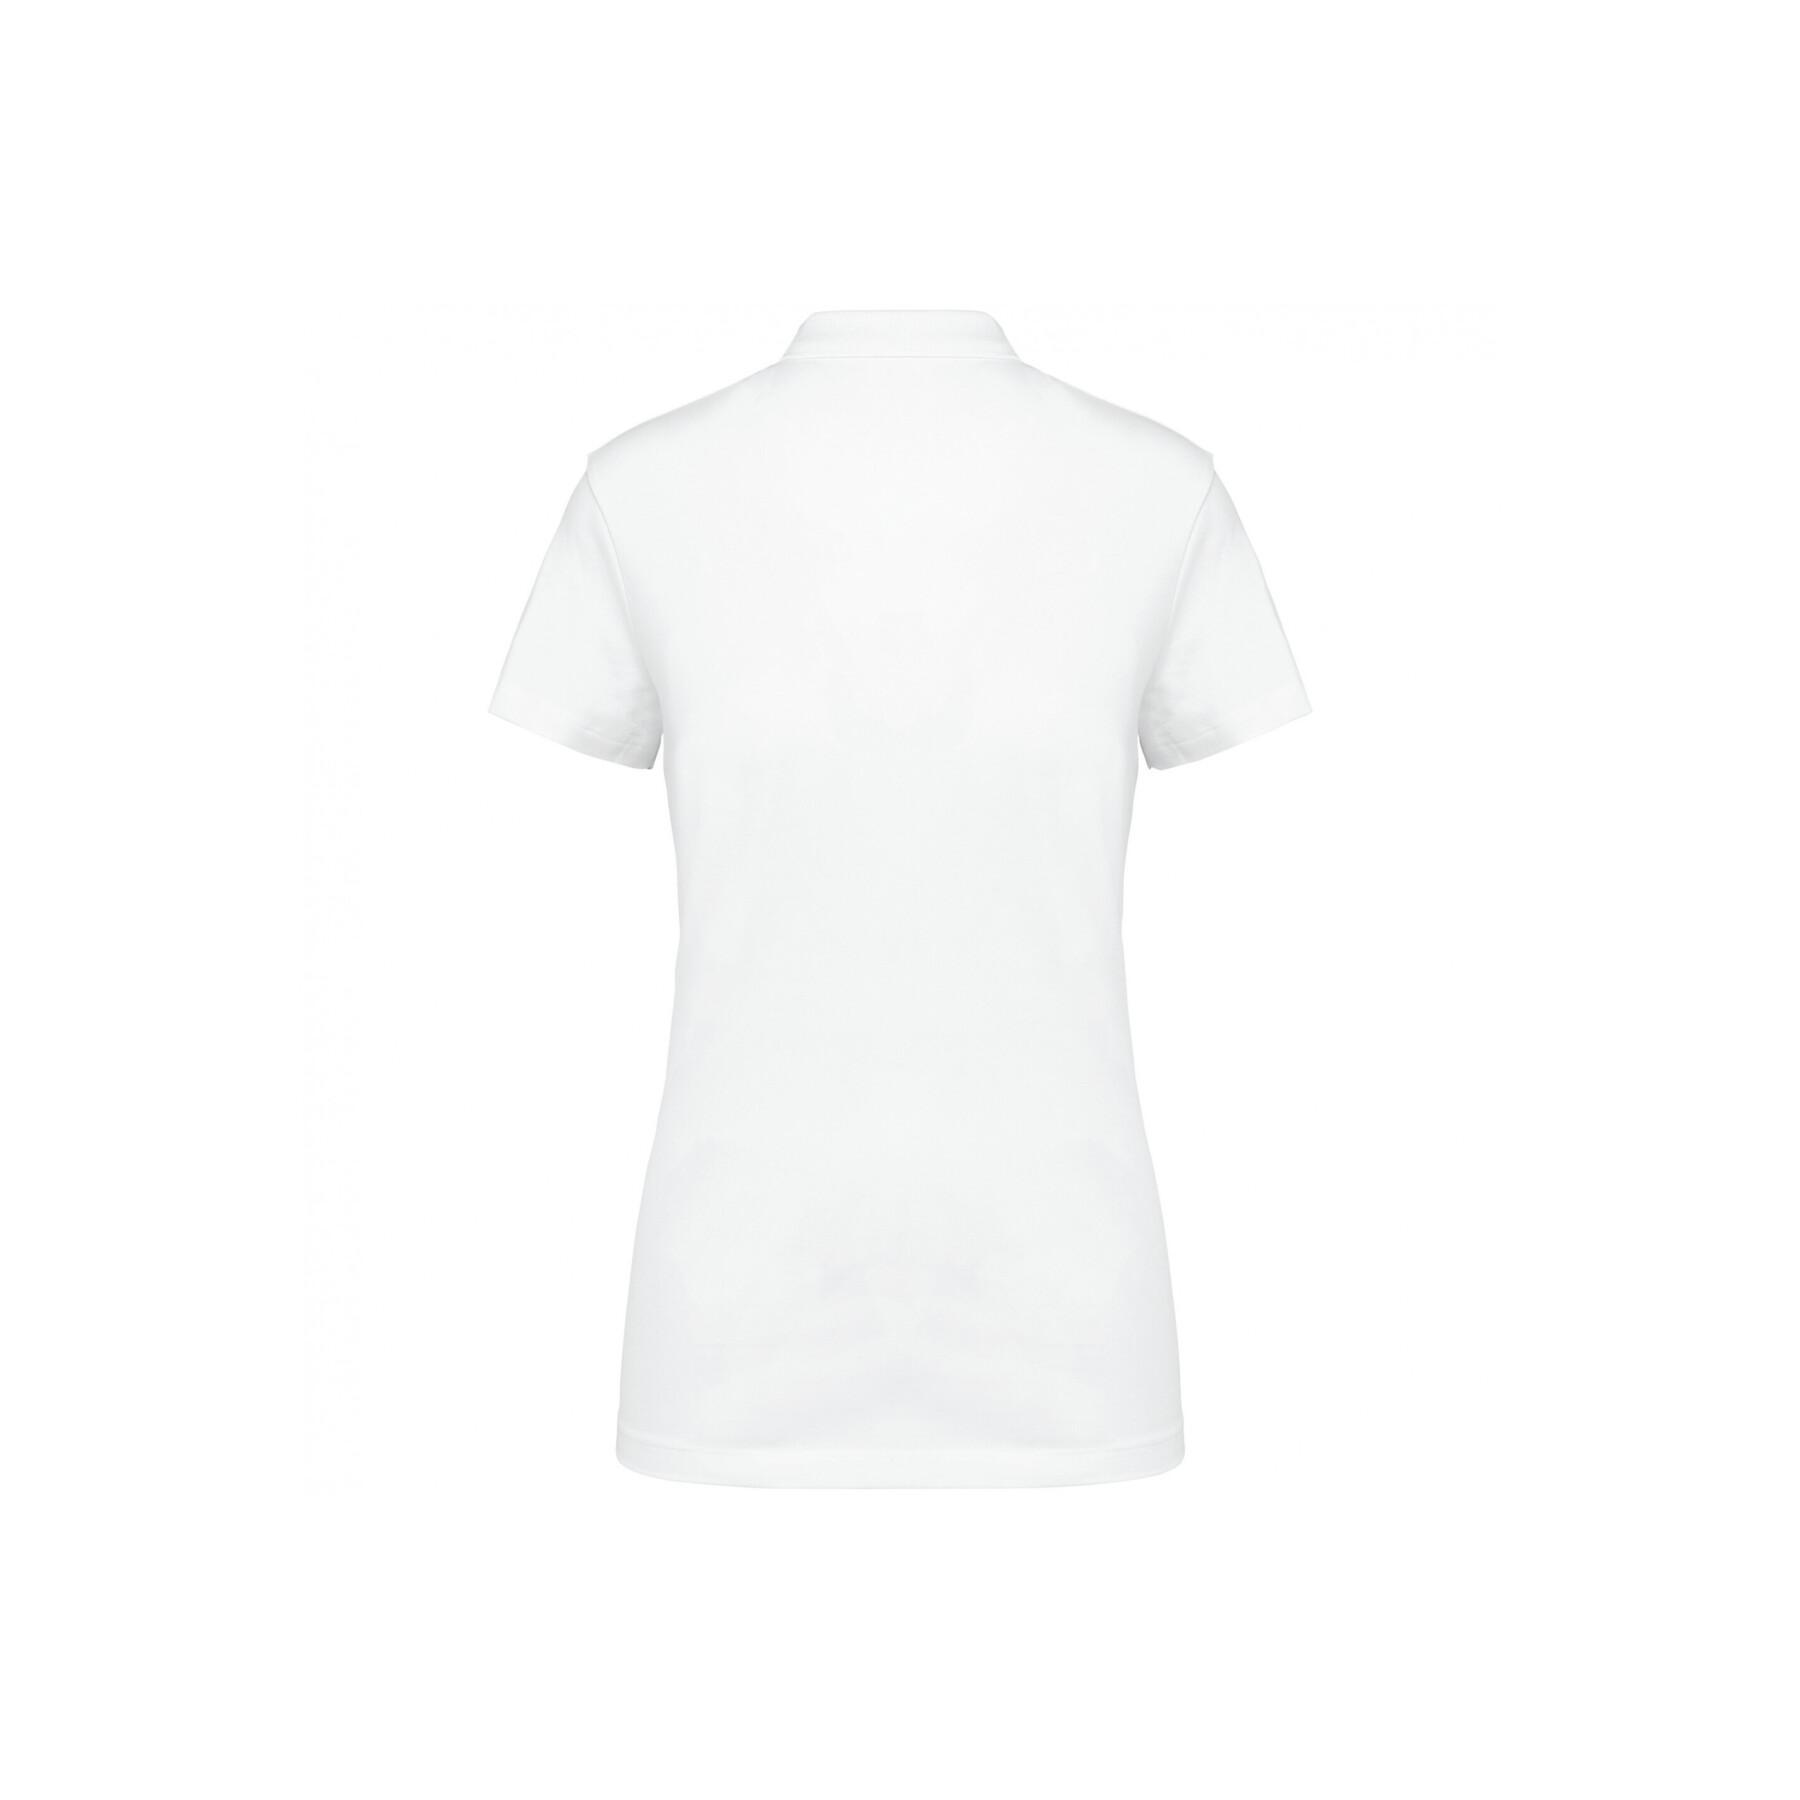 Koszulka polo z suprima dla kobiet Kariban Premium